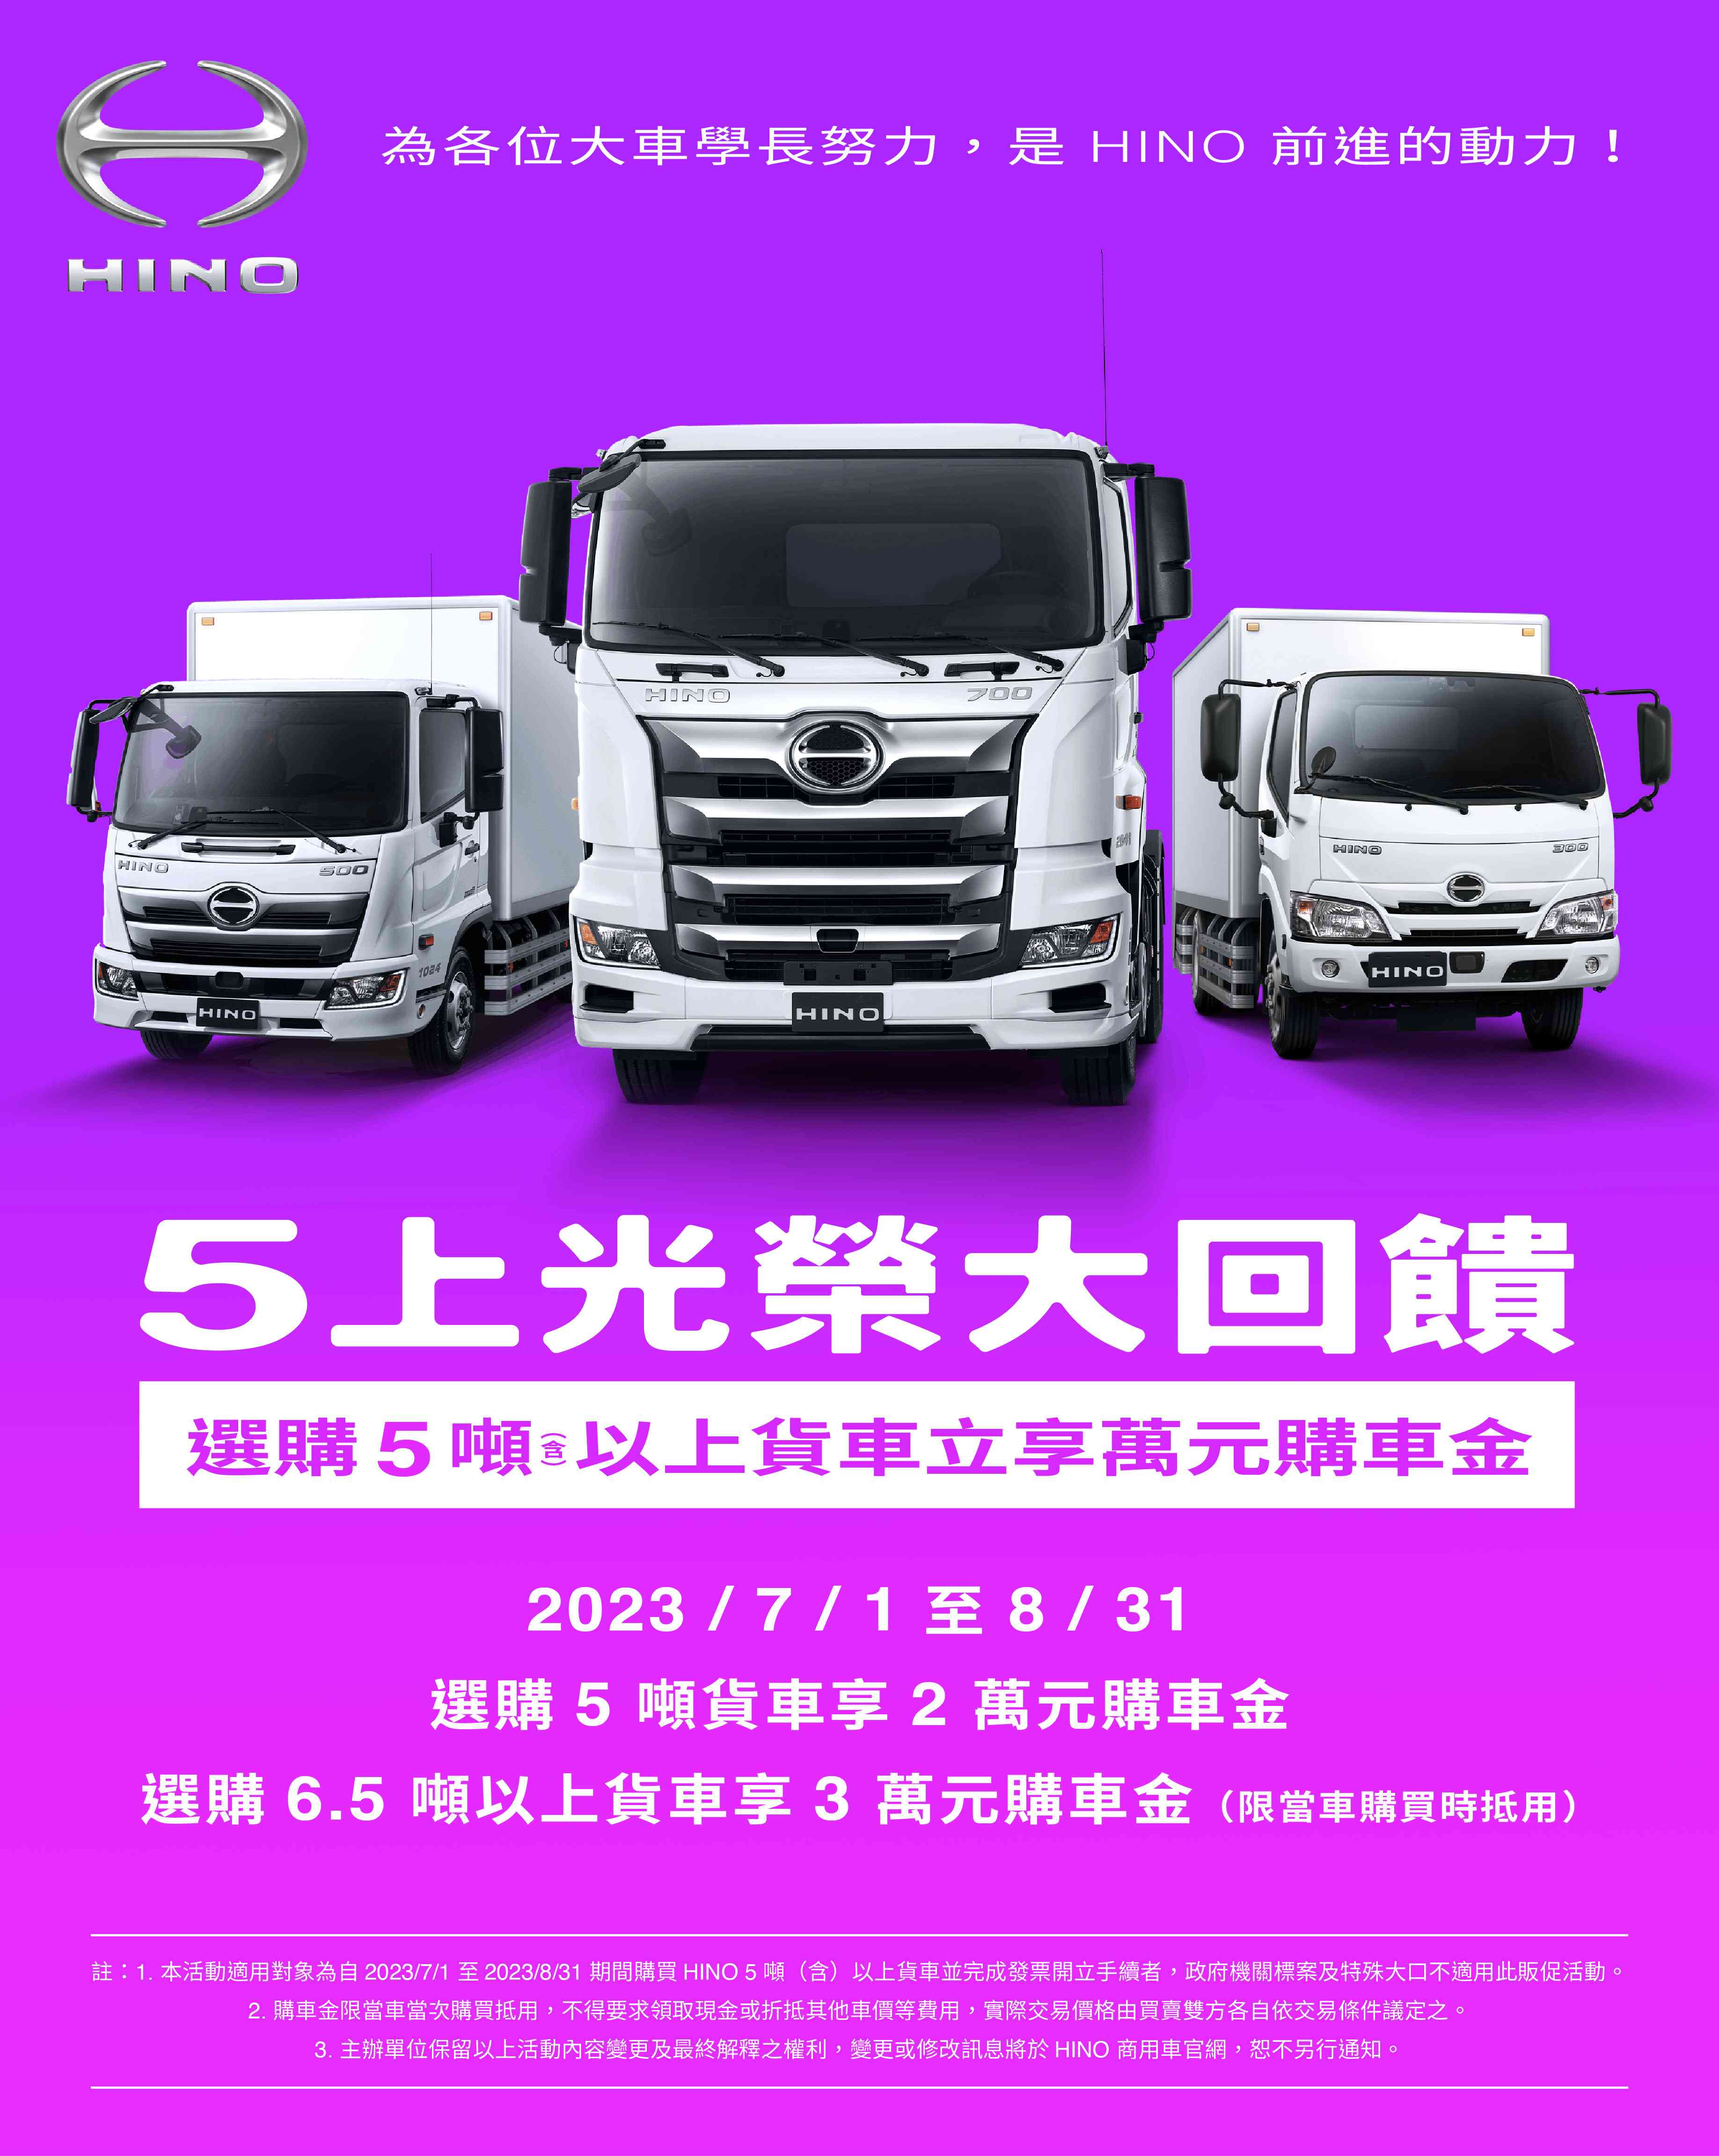 「HINO 5上光榮大回饋」選購5噸以上貨車立享萬元購車金！